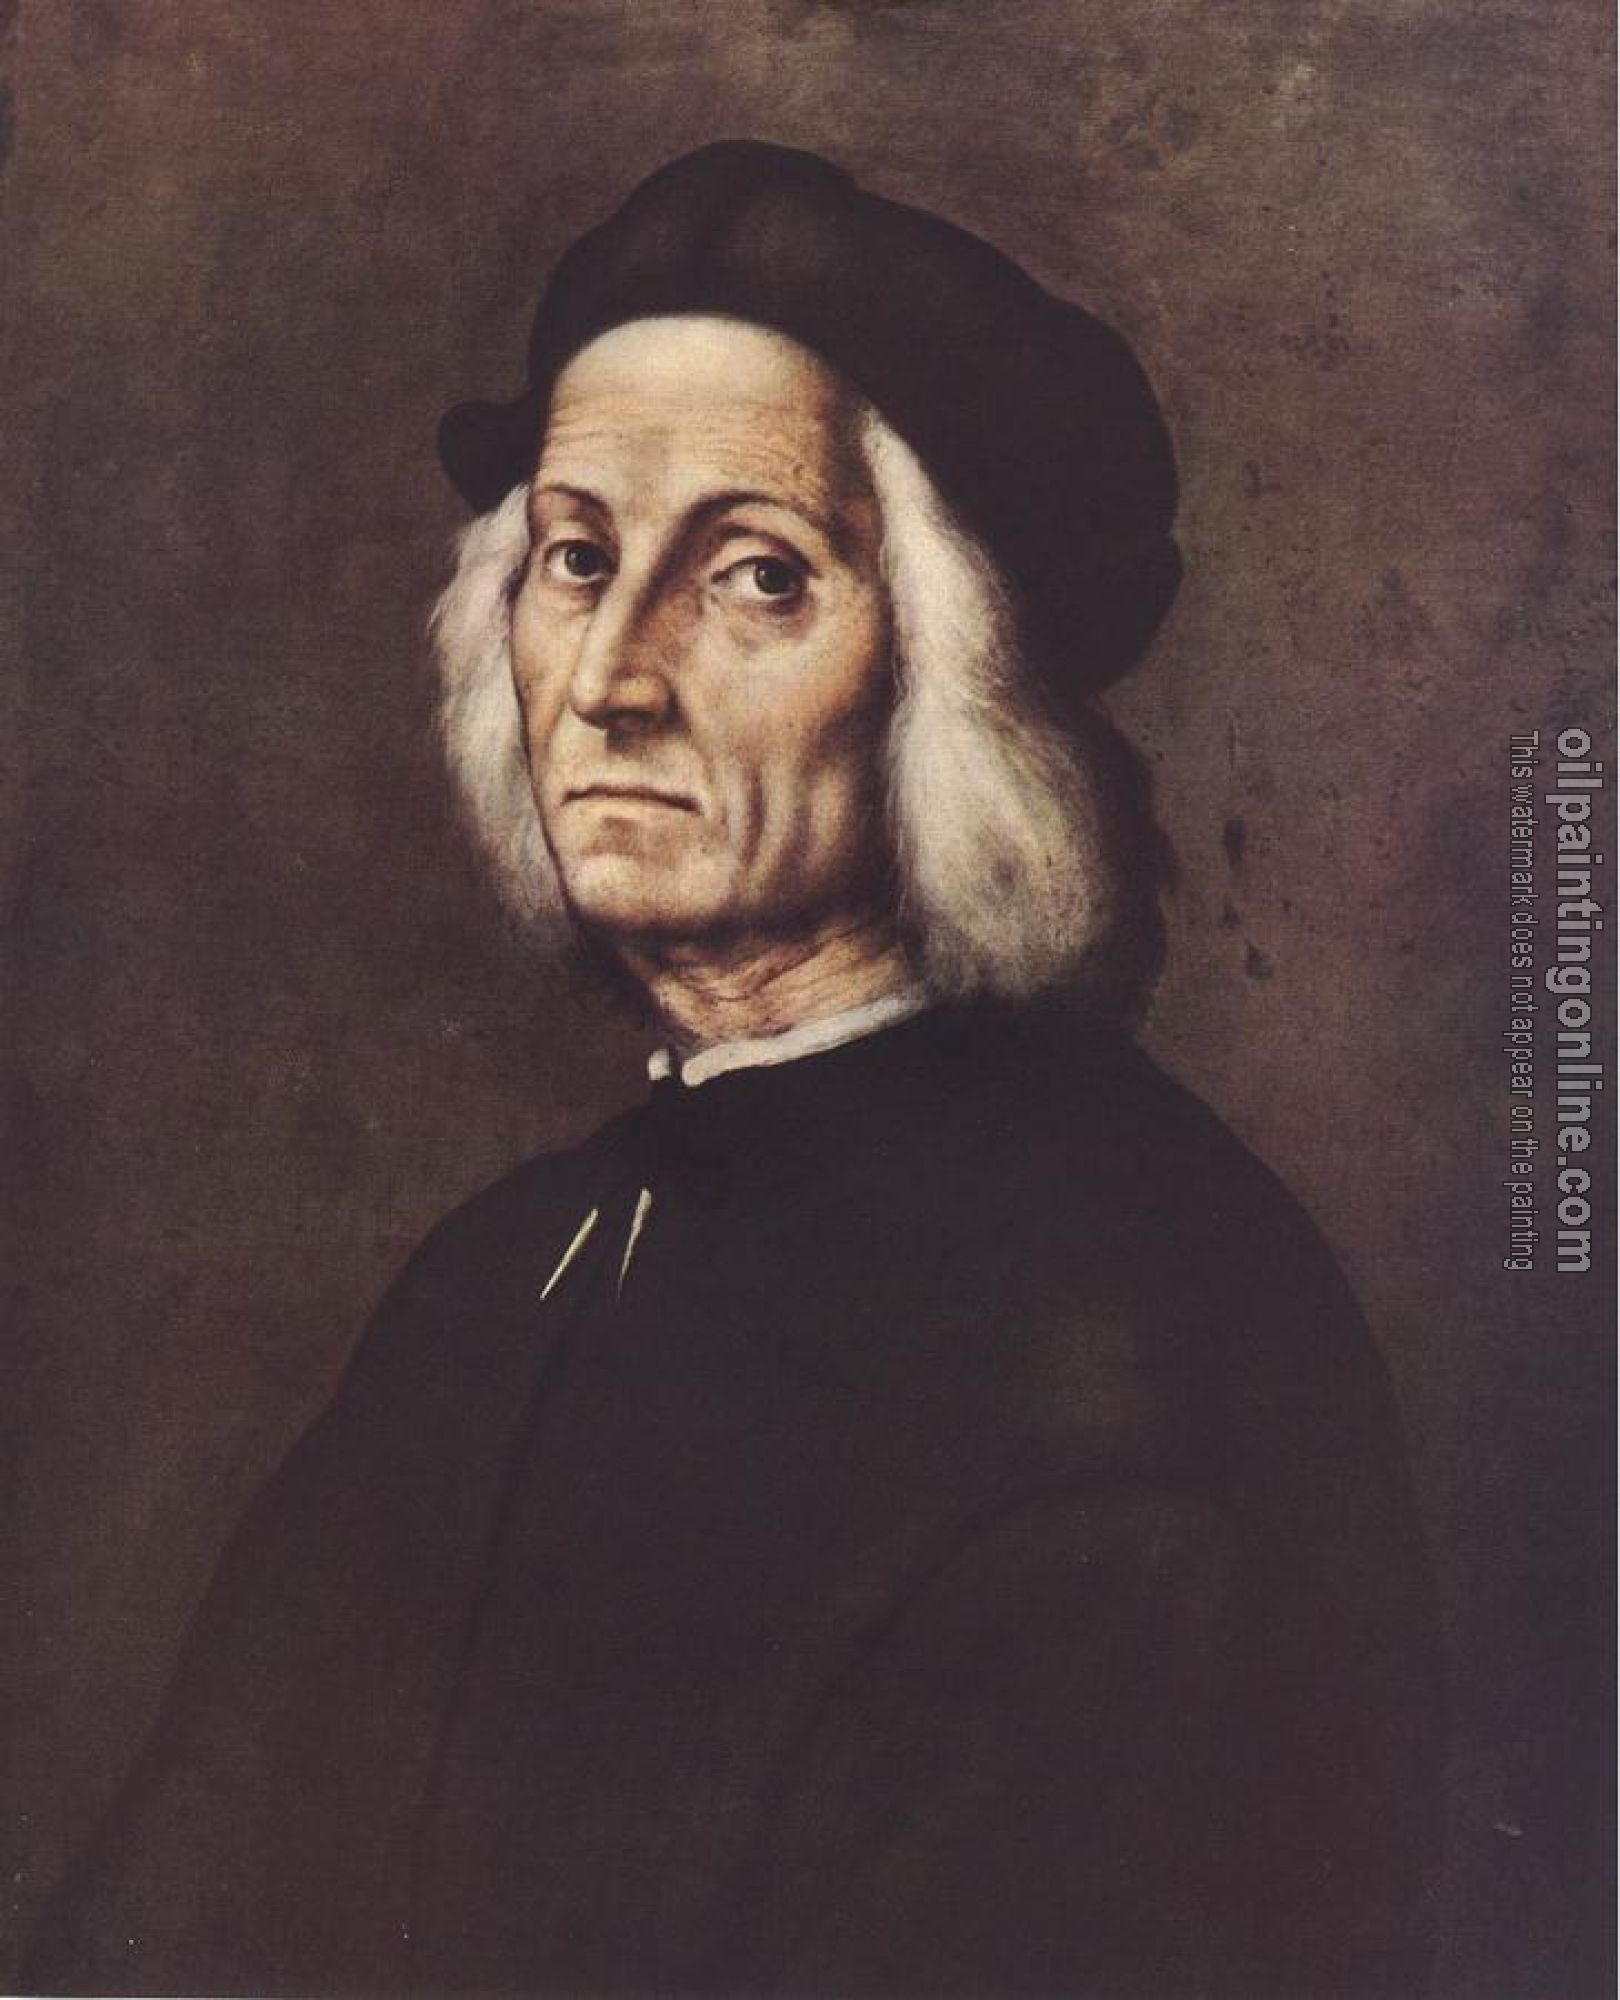 Ghirlandaio, Ridolfo - Portrait of an Old Man